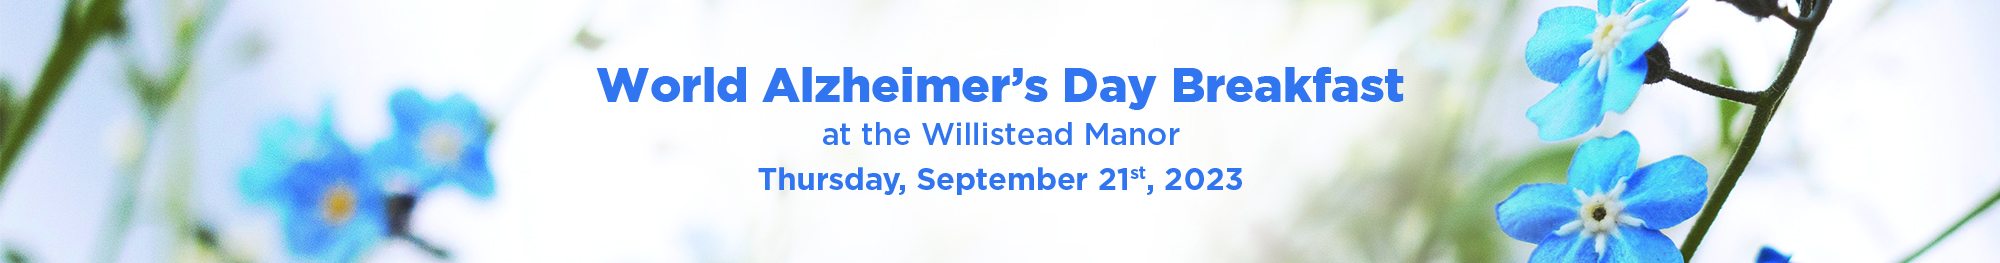 World Alzheimer's Day Breakfast Banner